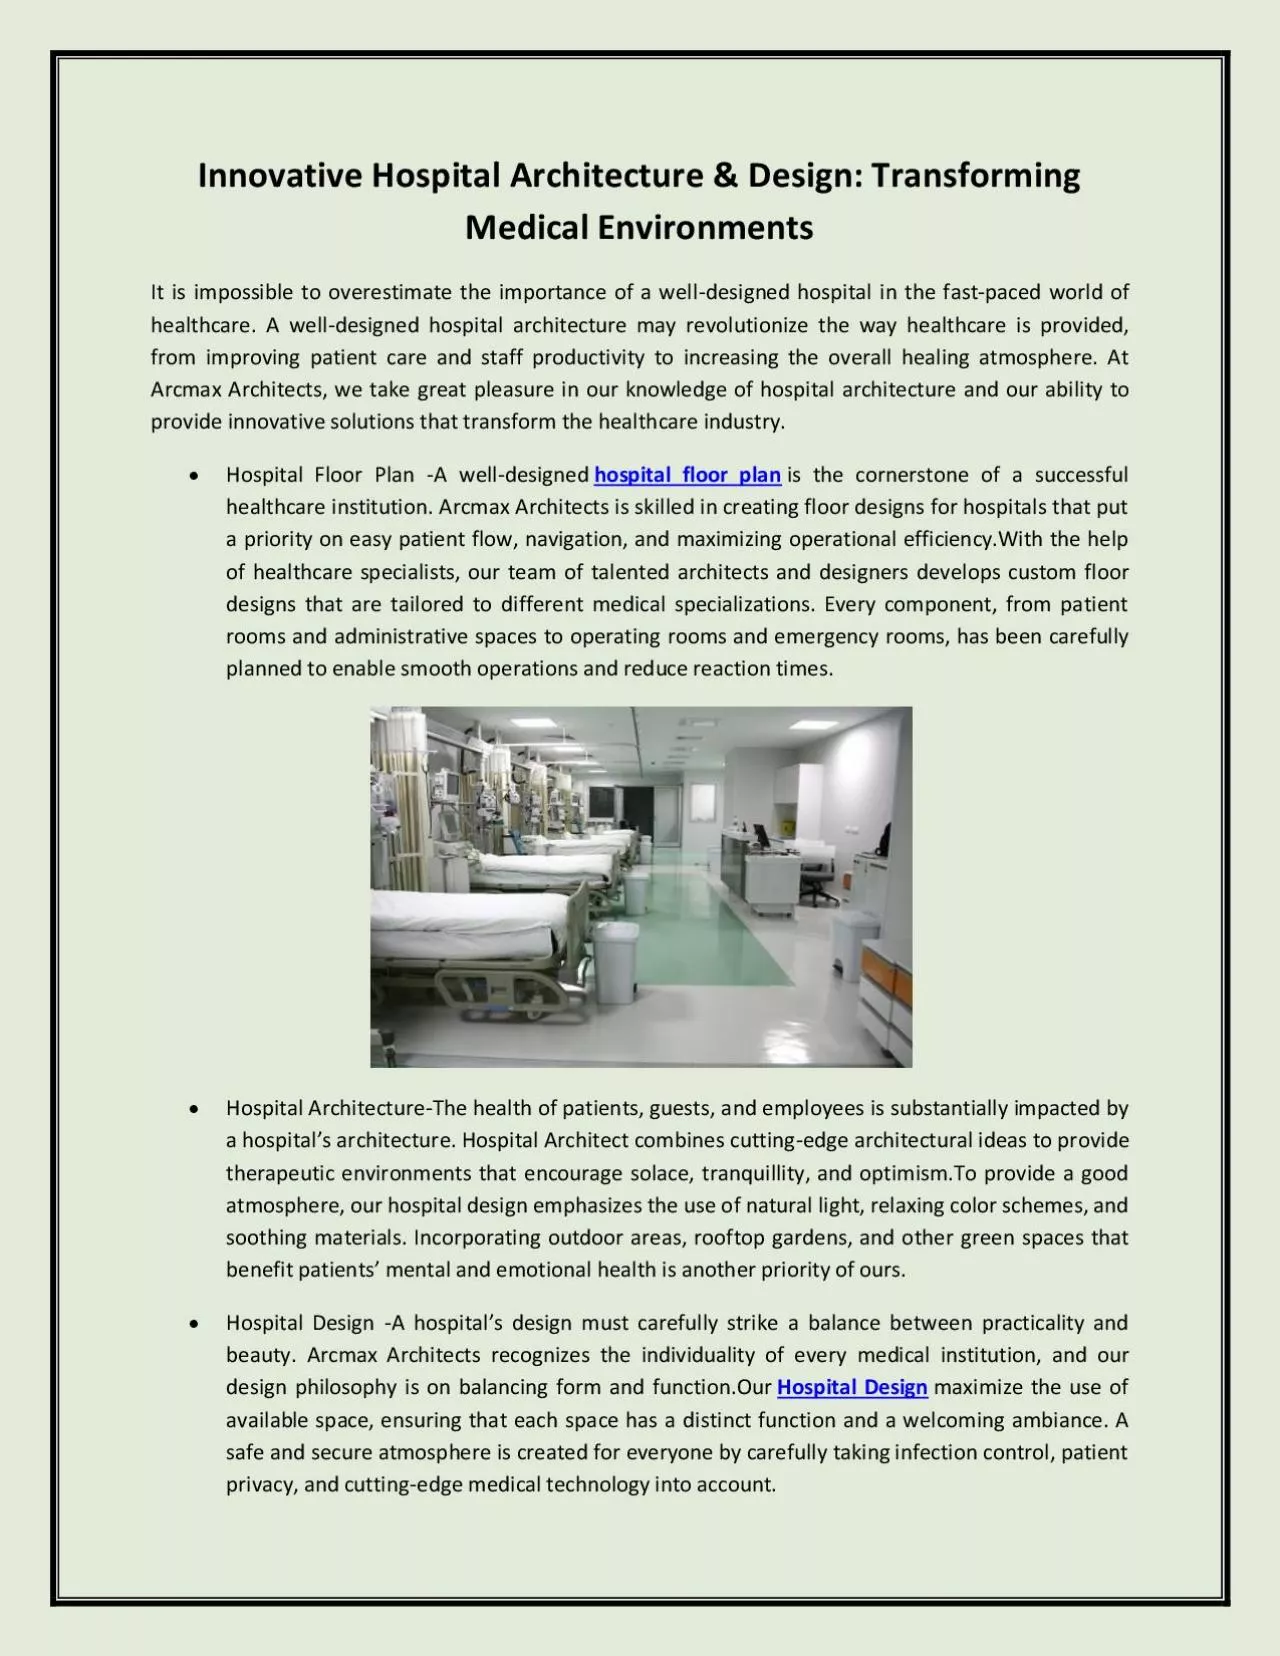 Innovative Hospital Architecture & Design: Transforming Medical Environments